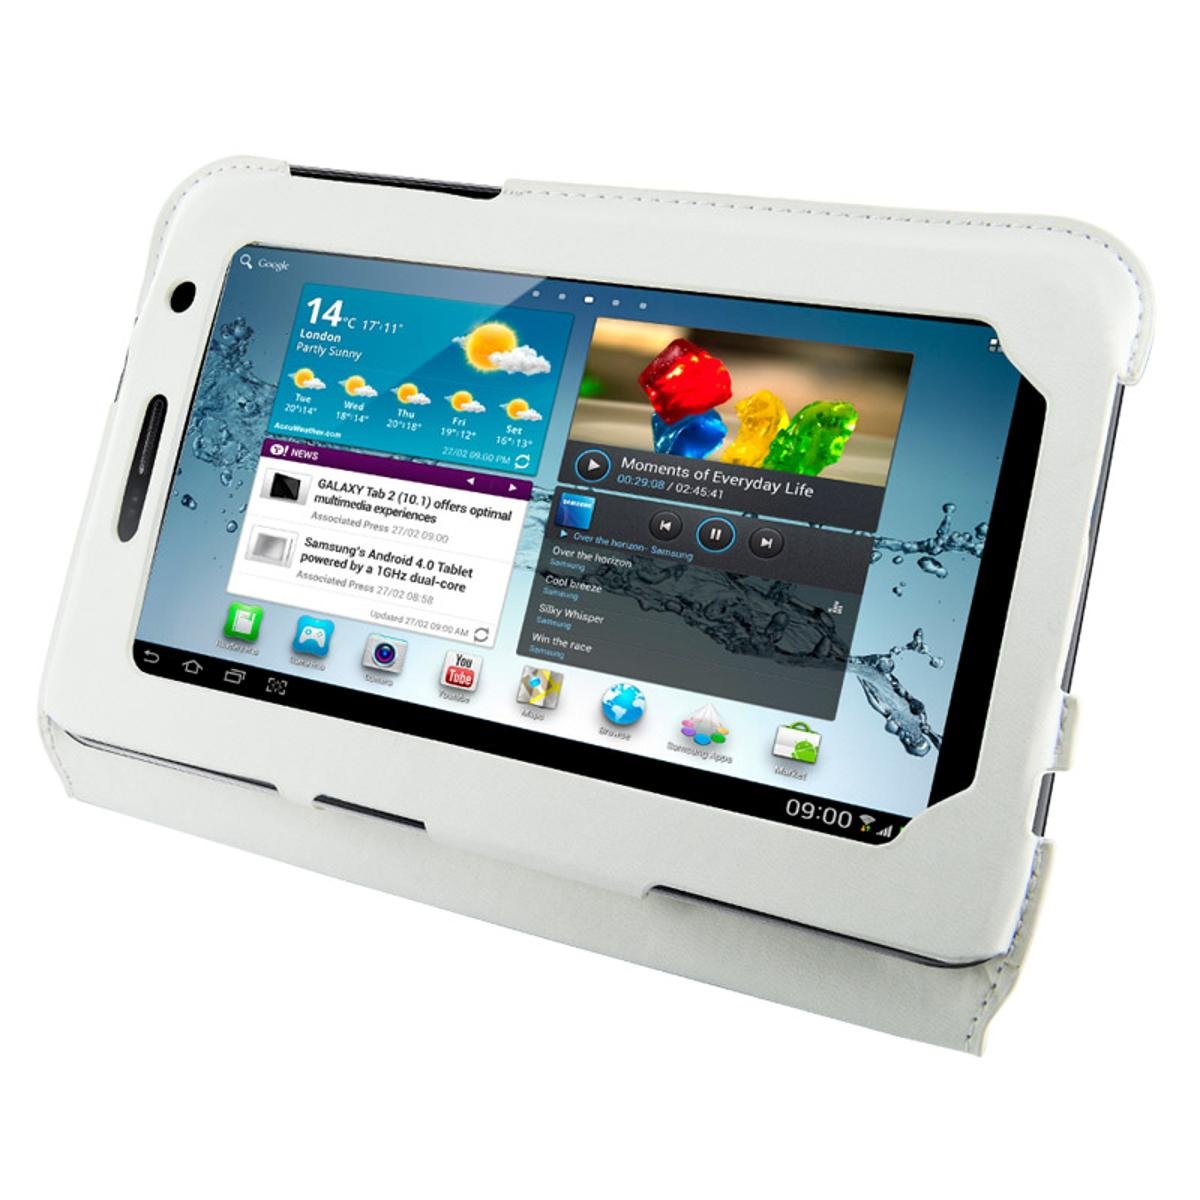 4World Etui - stand dla Galaxy Tab 2. Ultra Slim. 7. białe (9124)